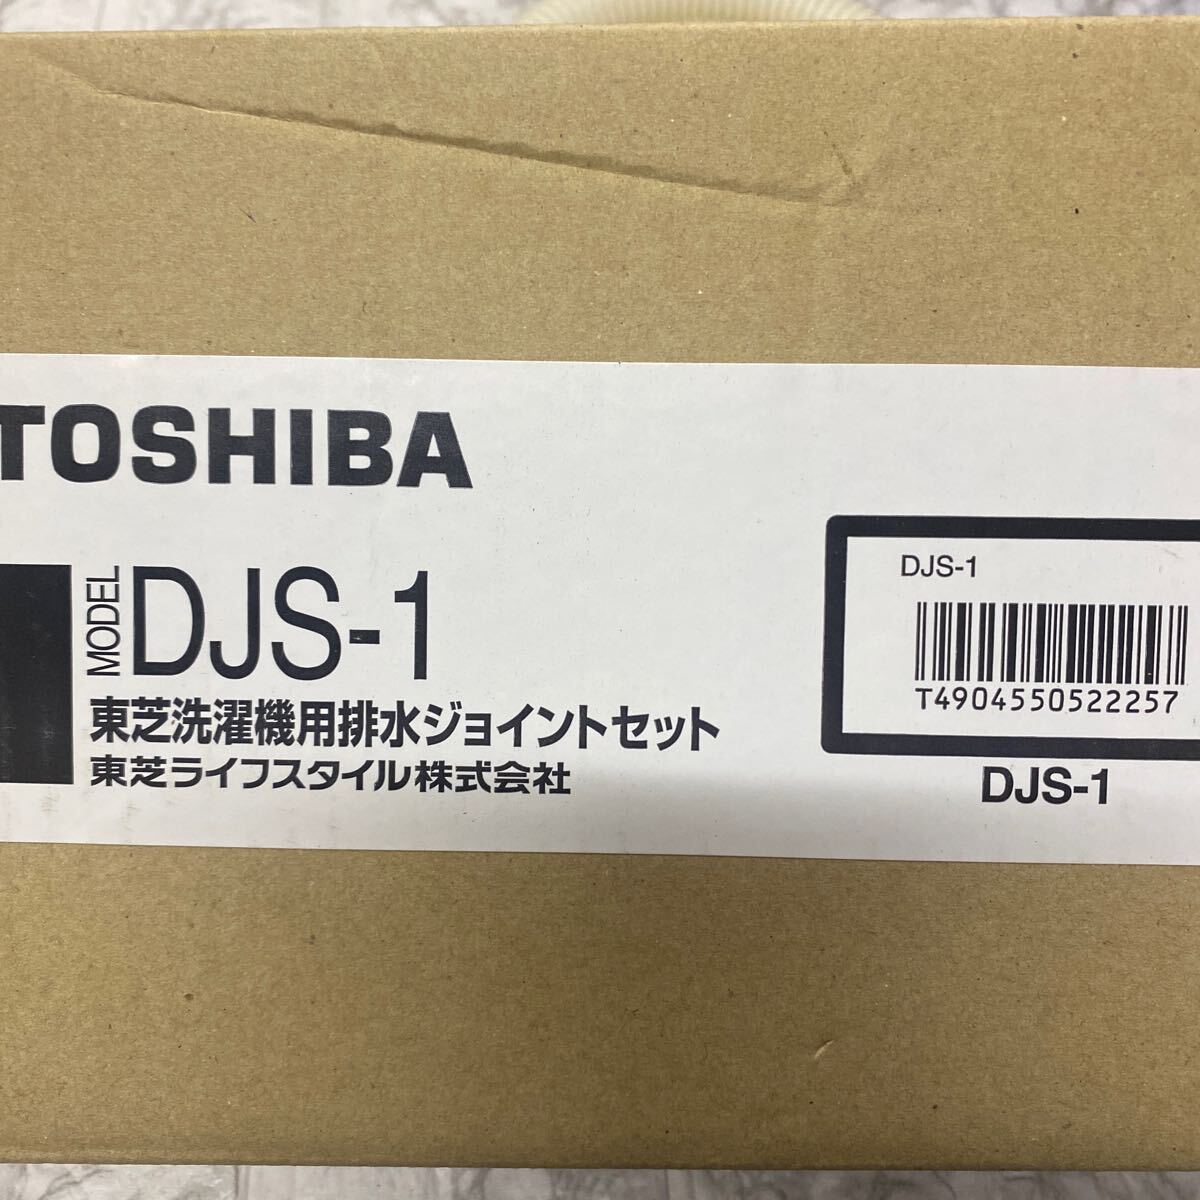  Toshiba drainage joint set TOSHIBA DJS-1 dryer for drain 